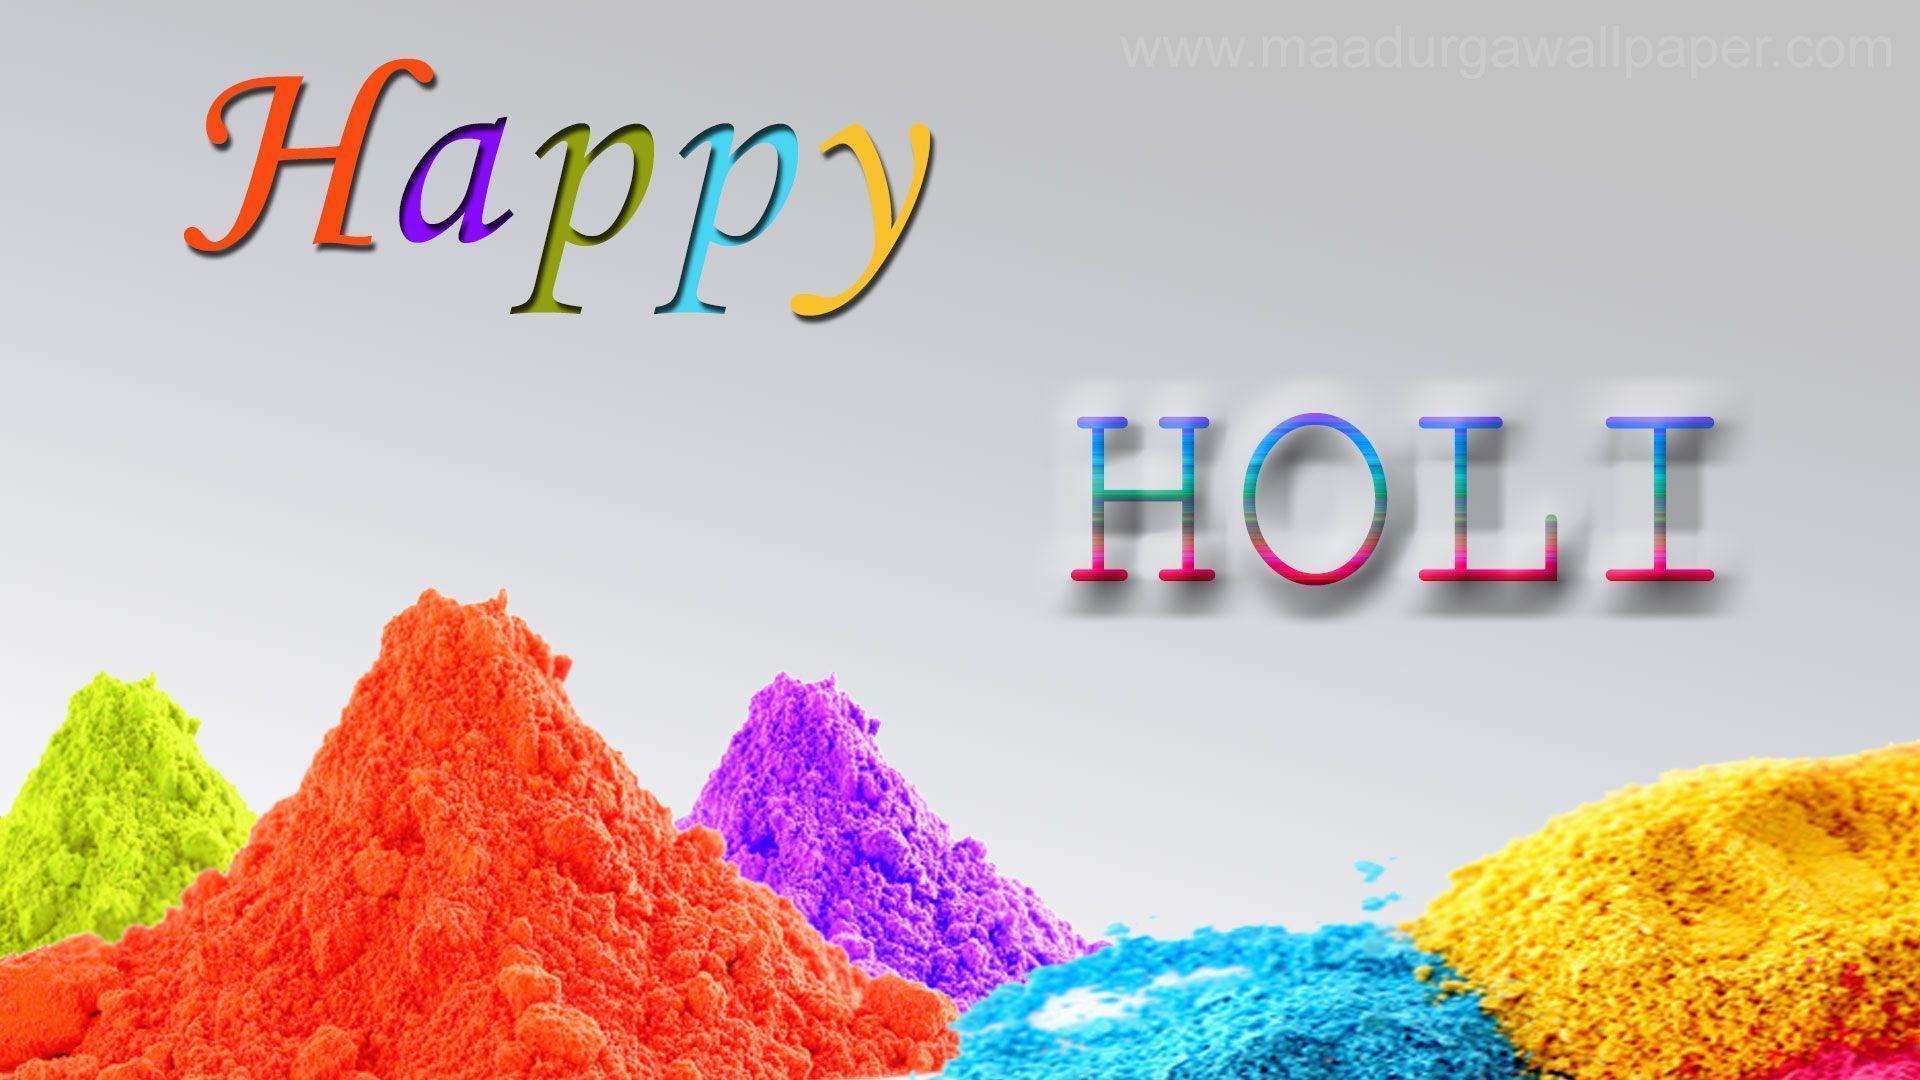 Happy Holi Image And Wallpaper